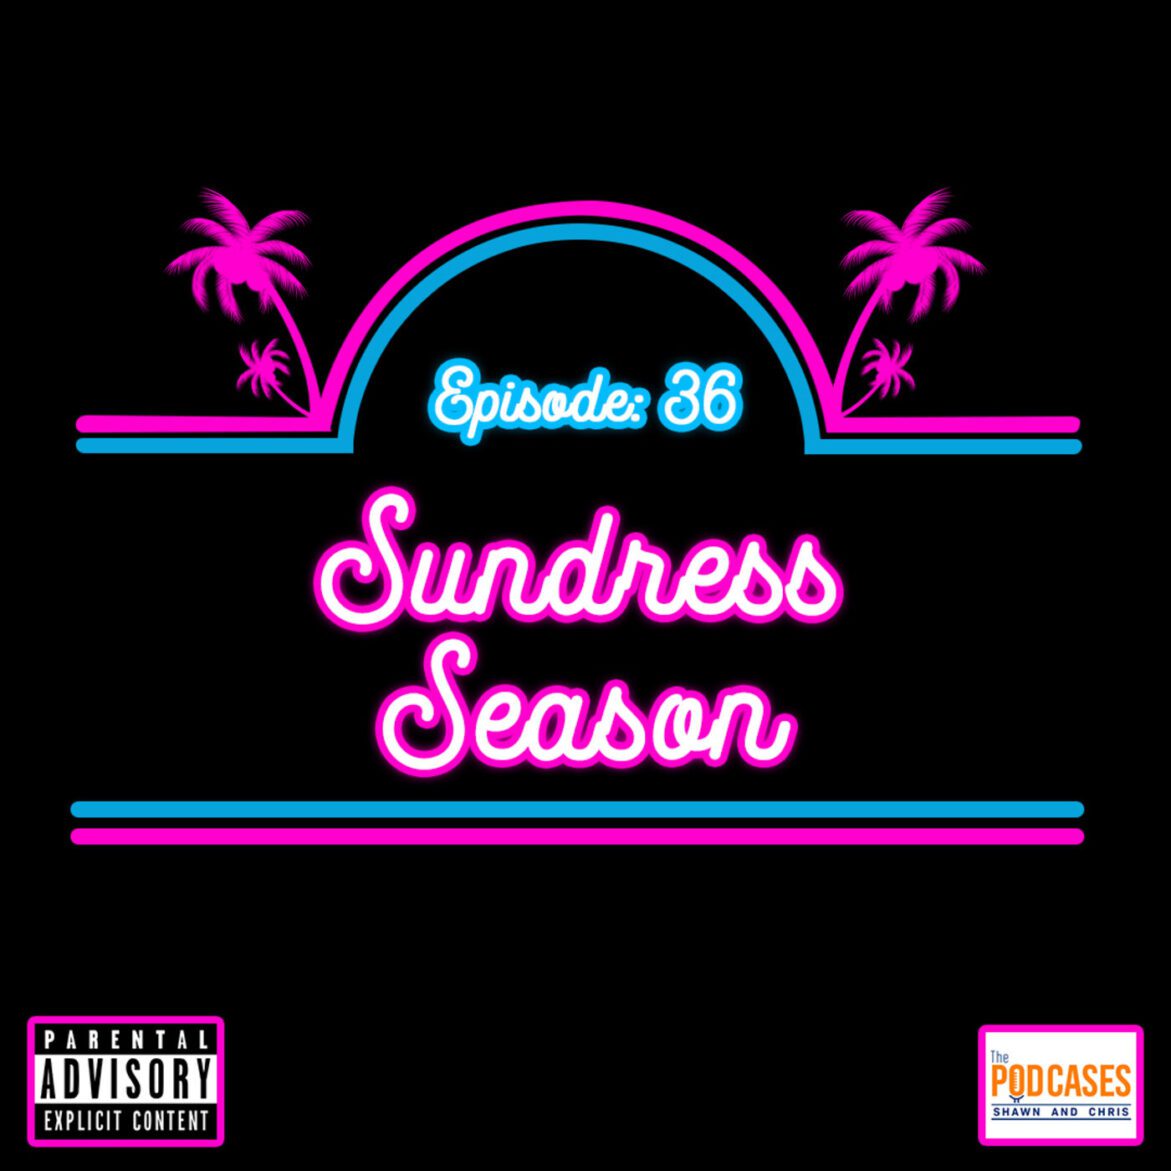 Black Podcasting - Episode 36: Sundress Season